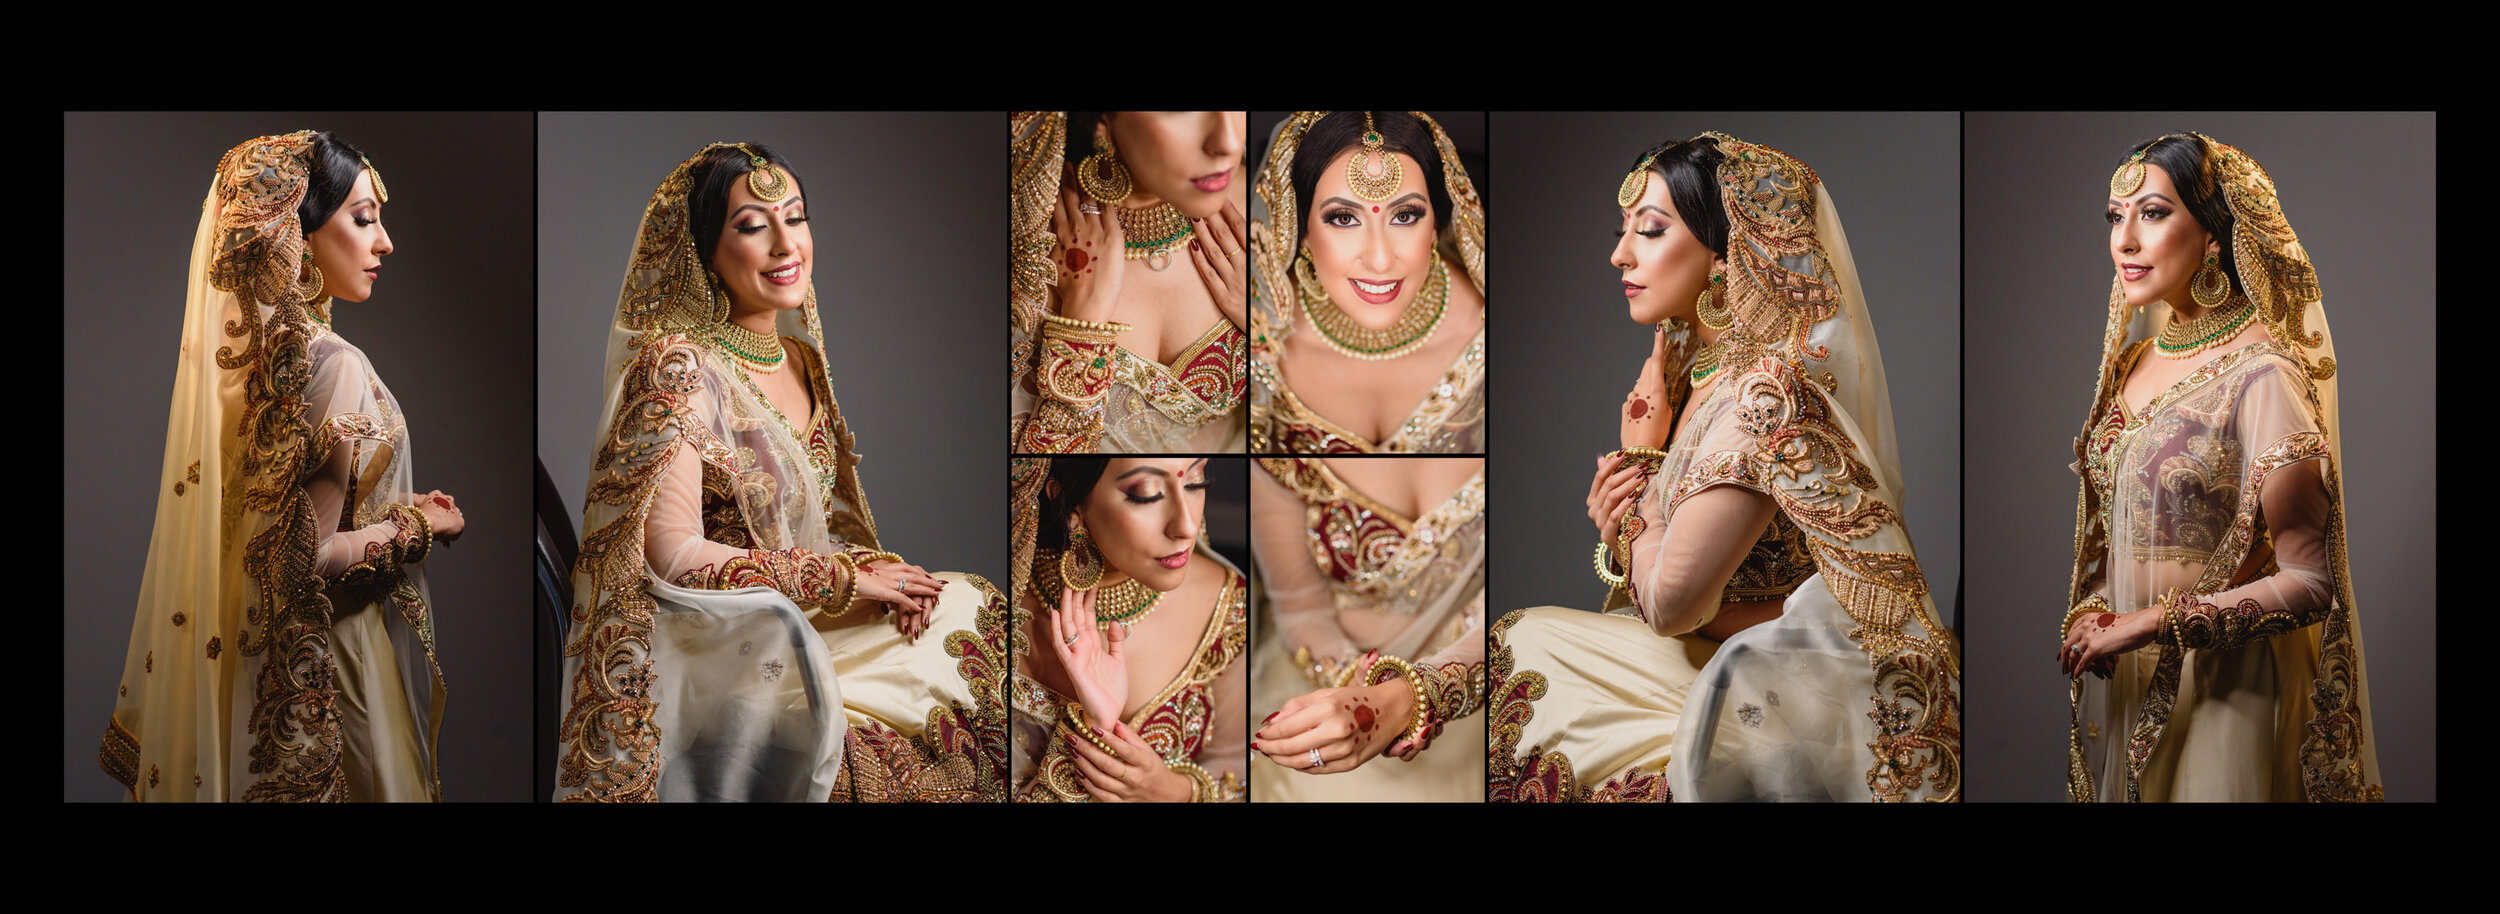 satnam photography luxury hindu wedding album -11.jpg